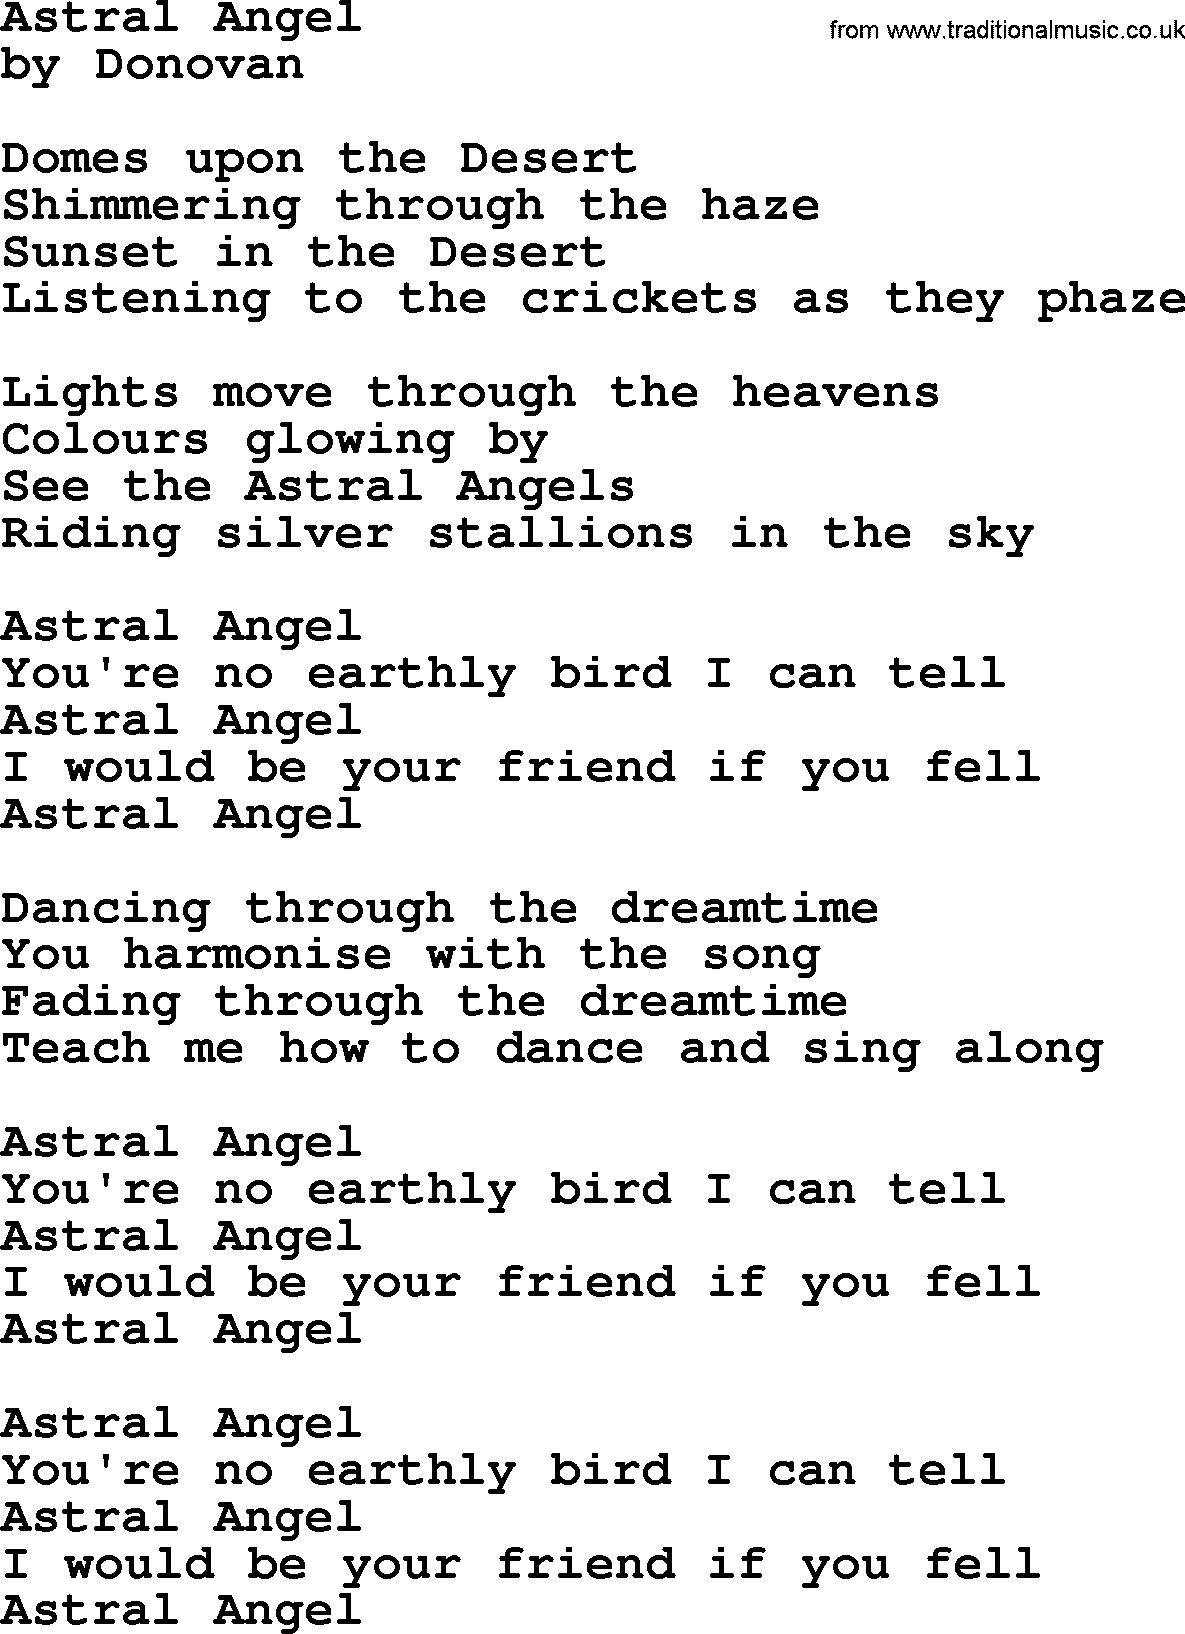 Donovan Leitch song: Astral Angel lyrics